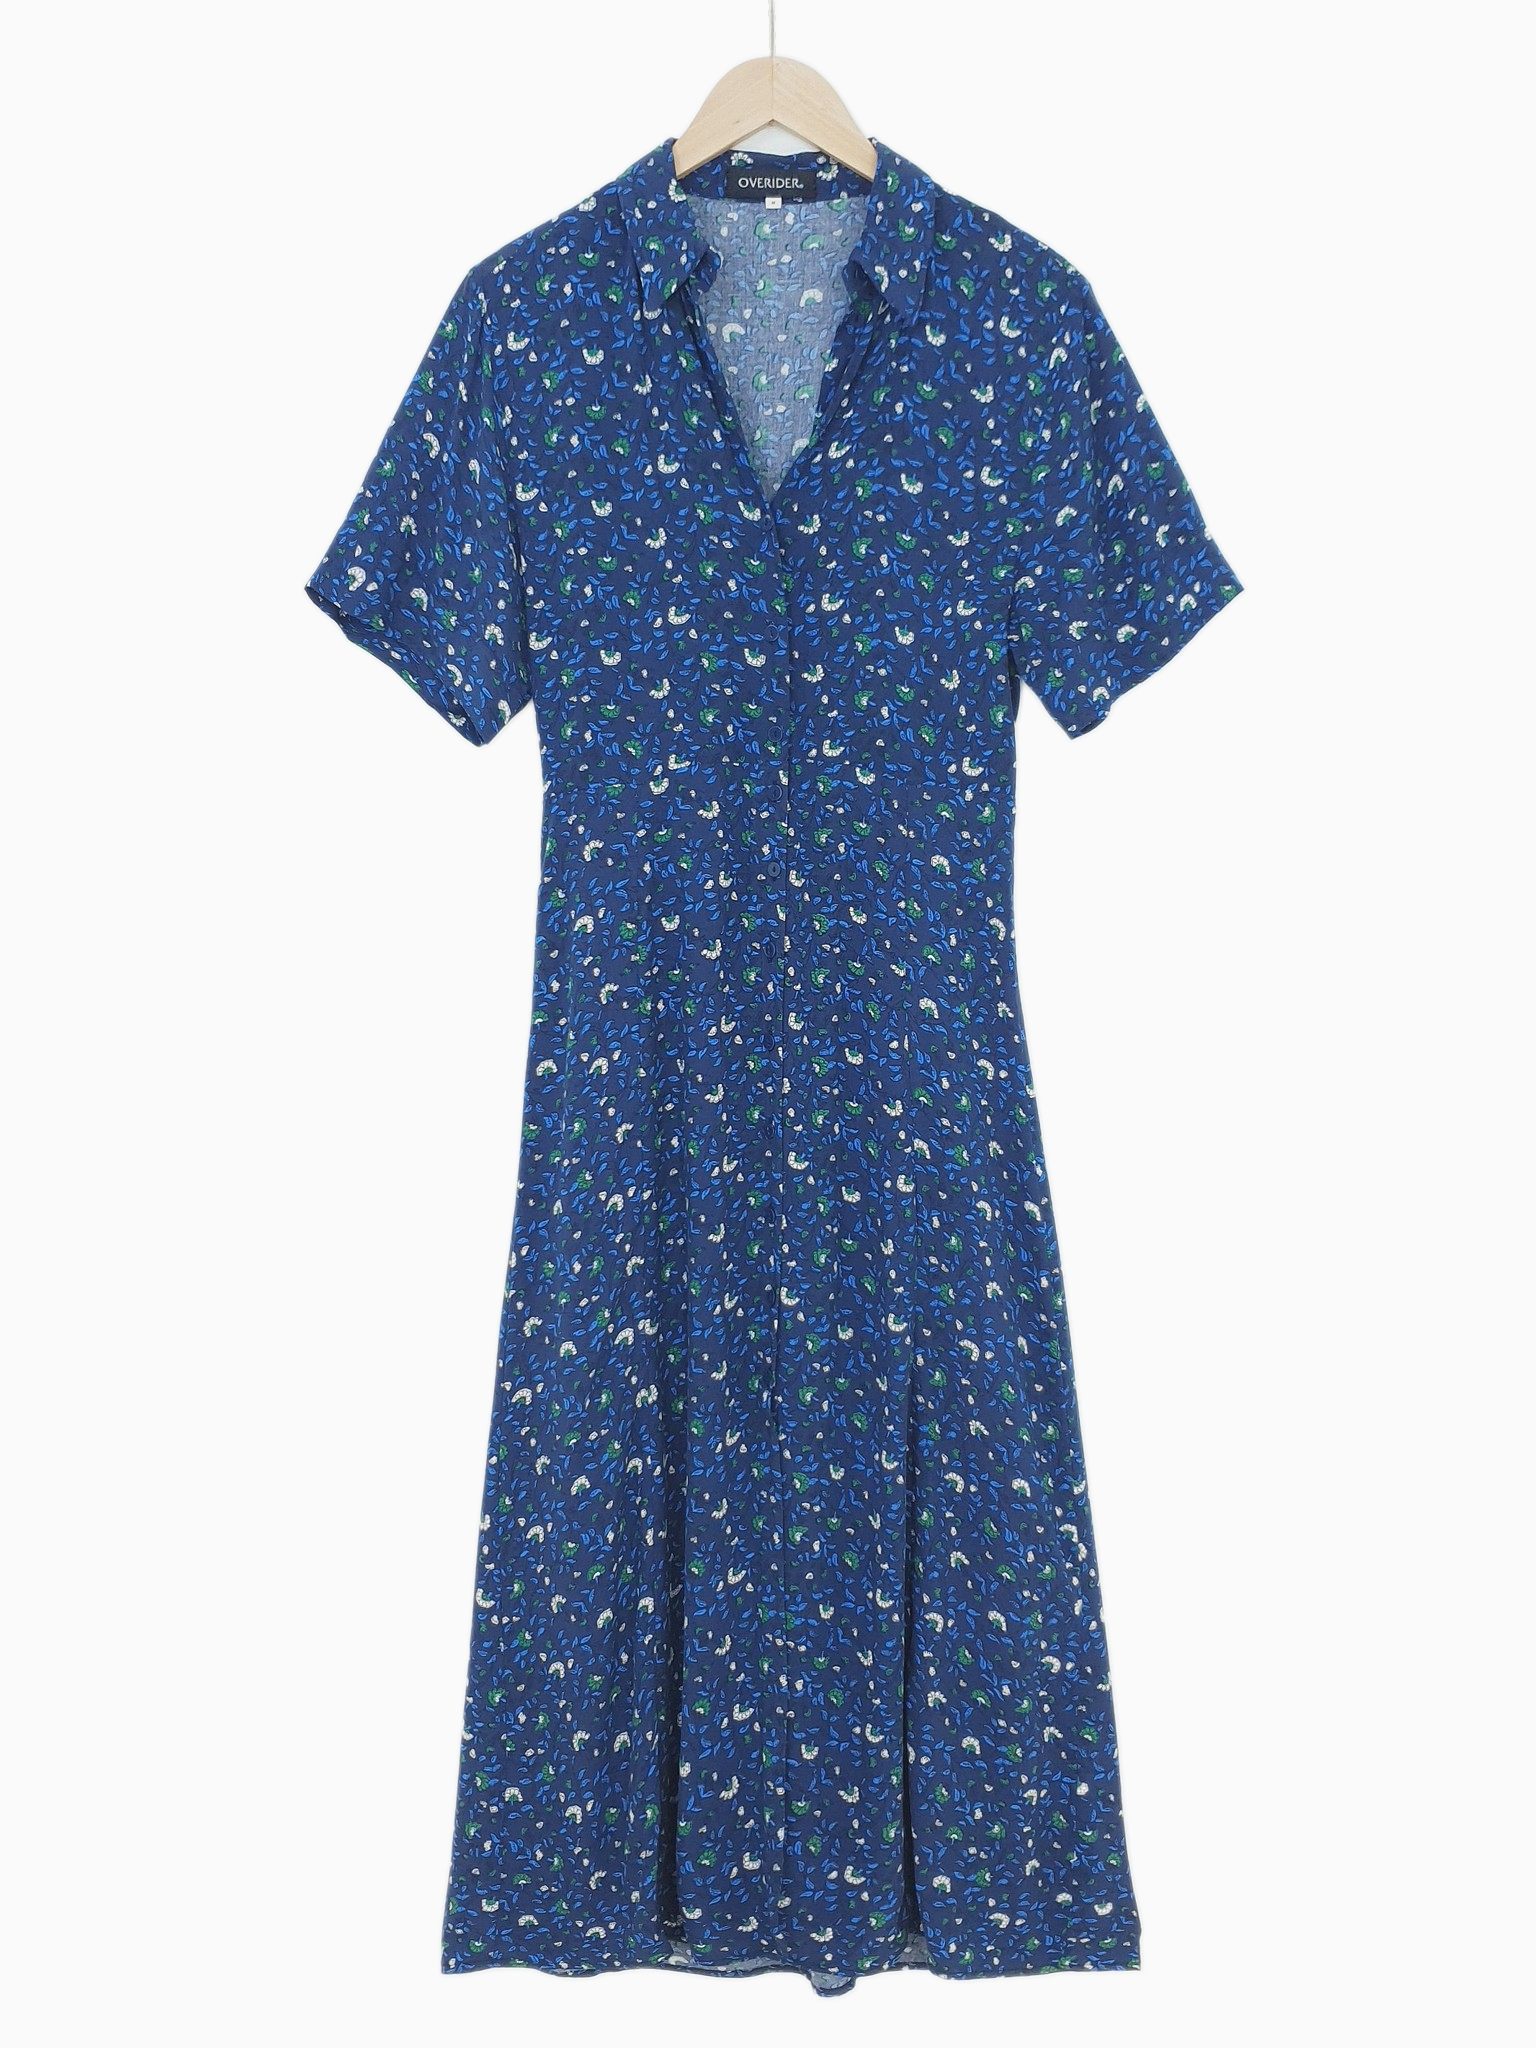 SORINA | Patterned Summer Dress | Navy